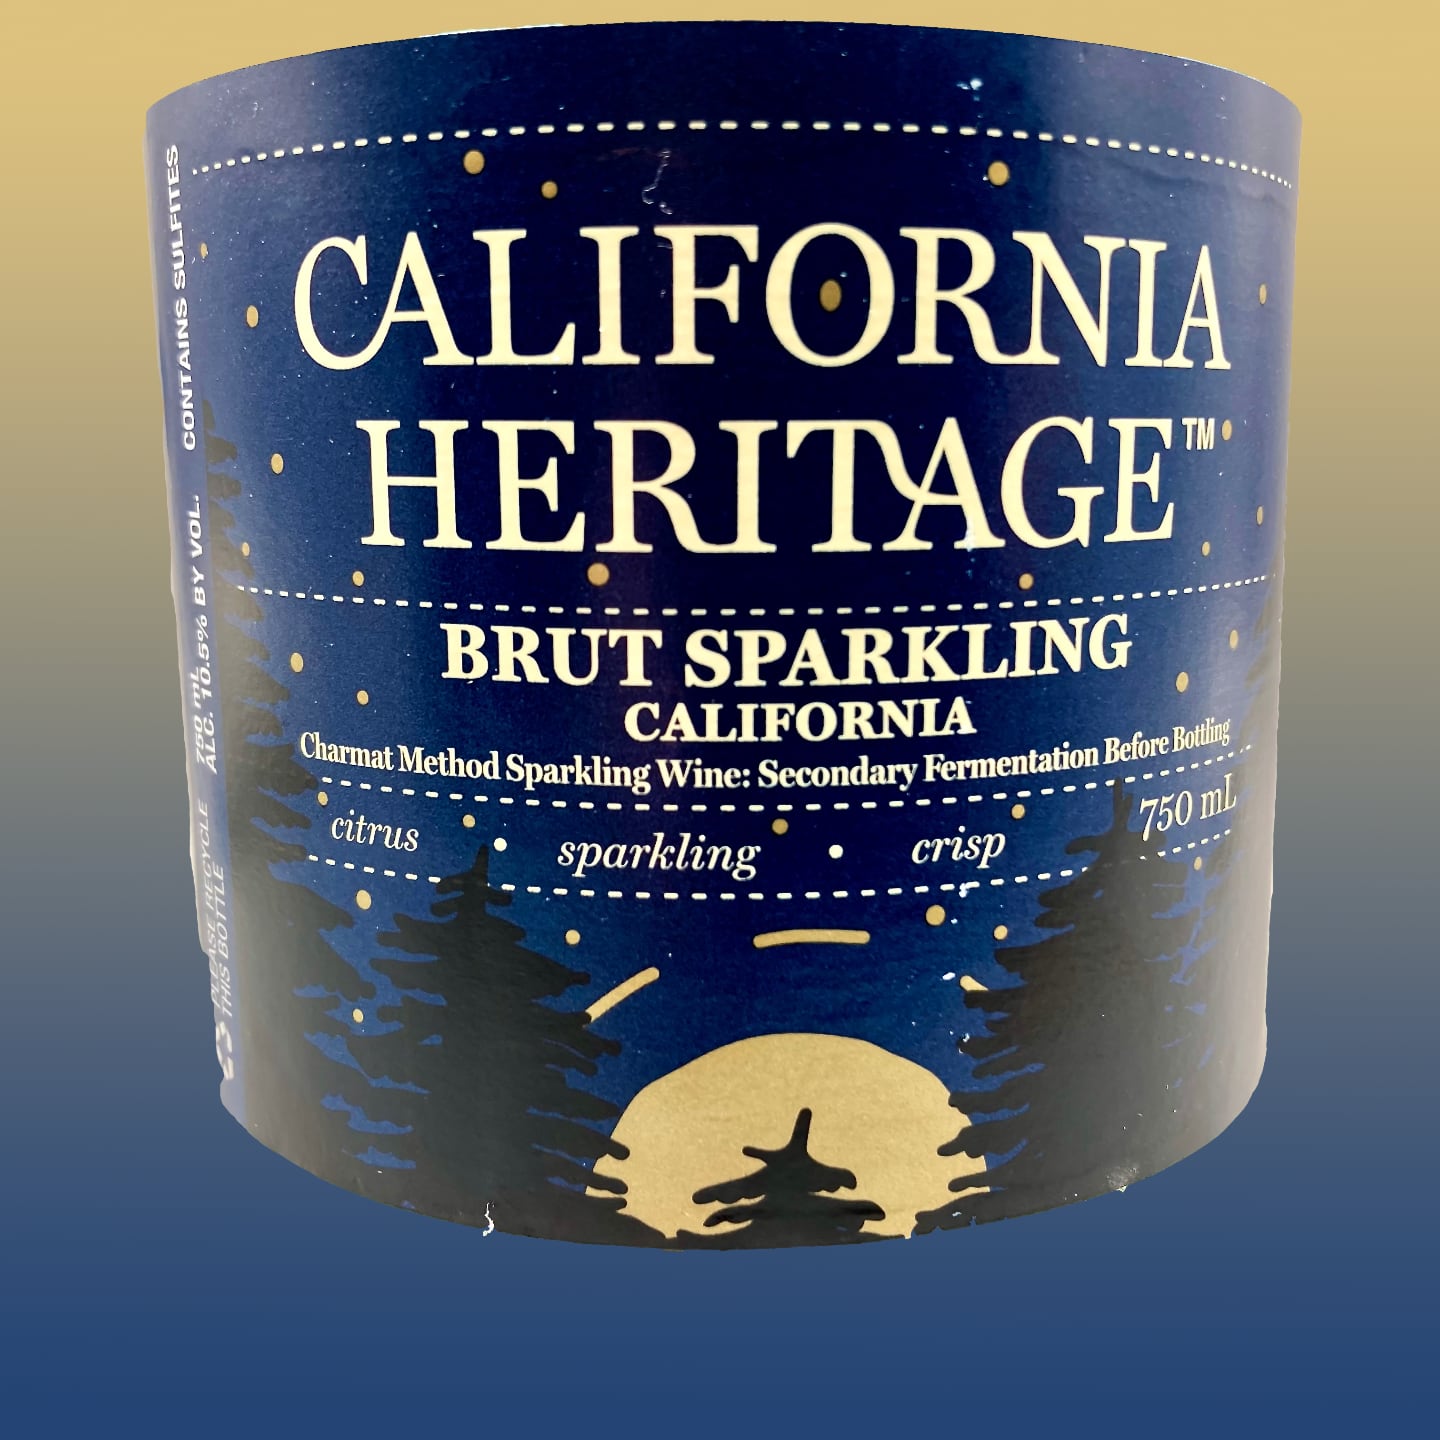 Aldi's California Heritage Brut Sparkling Wine